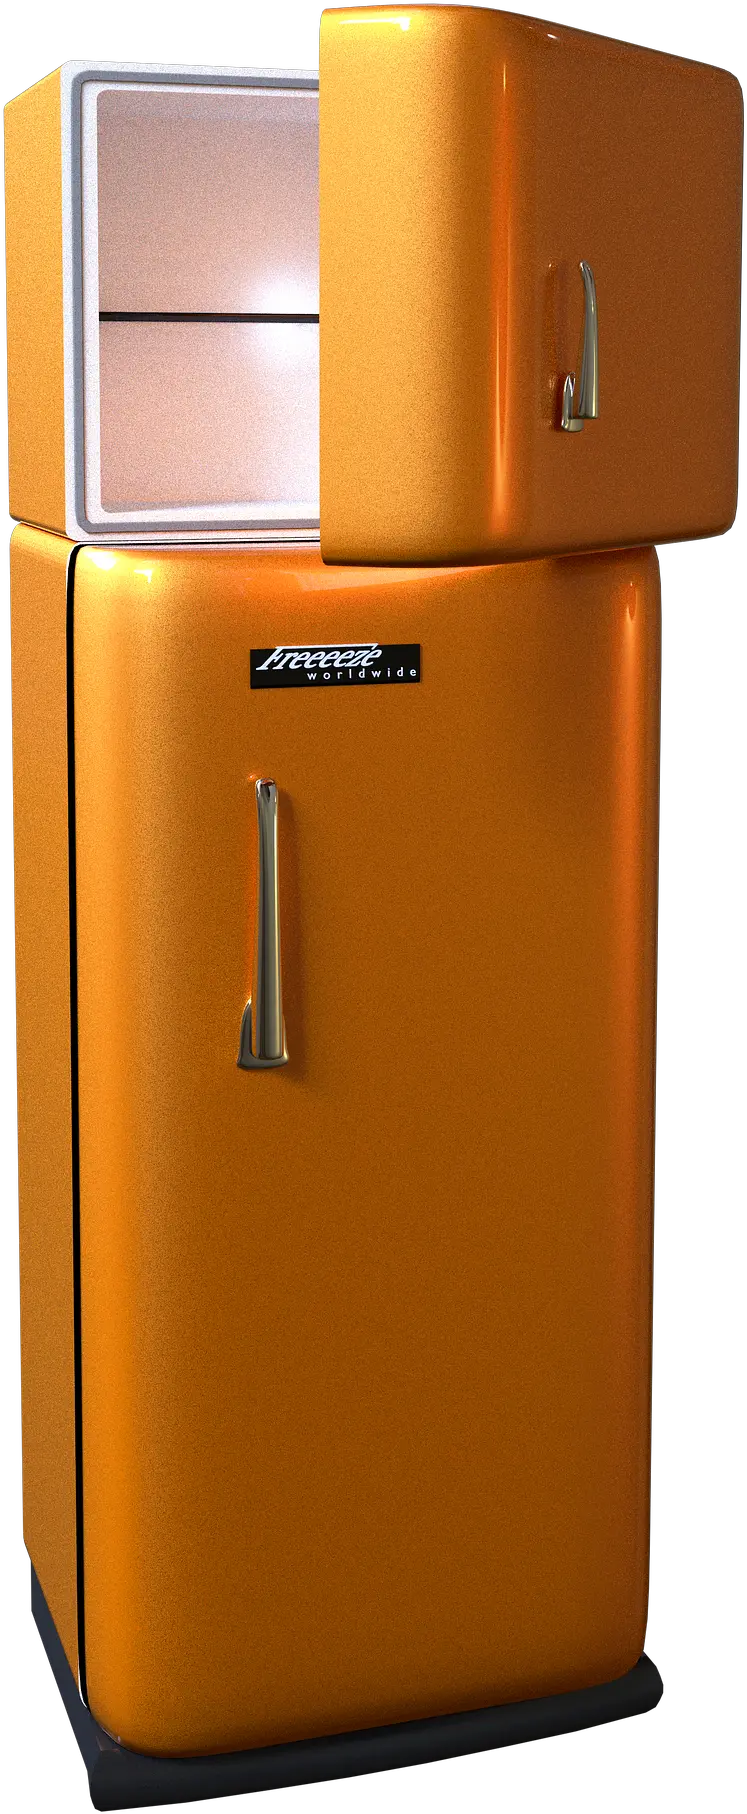 Refrigerator Freezer Png